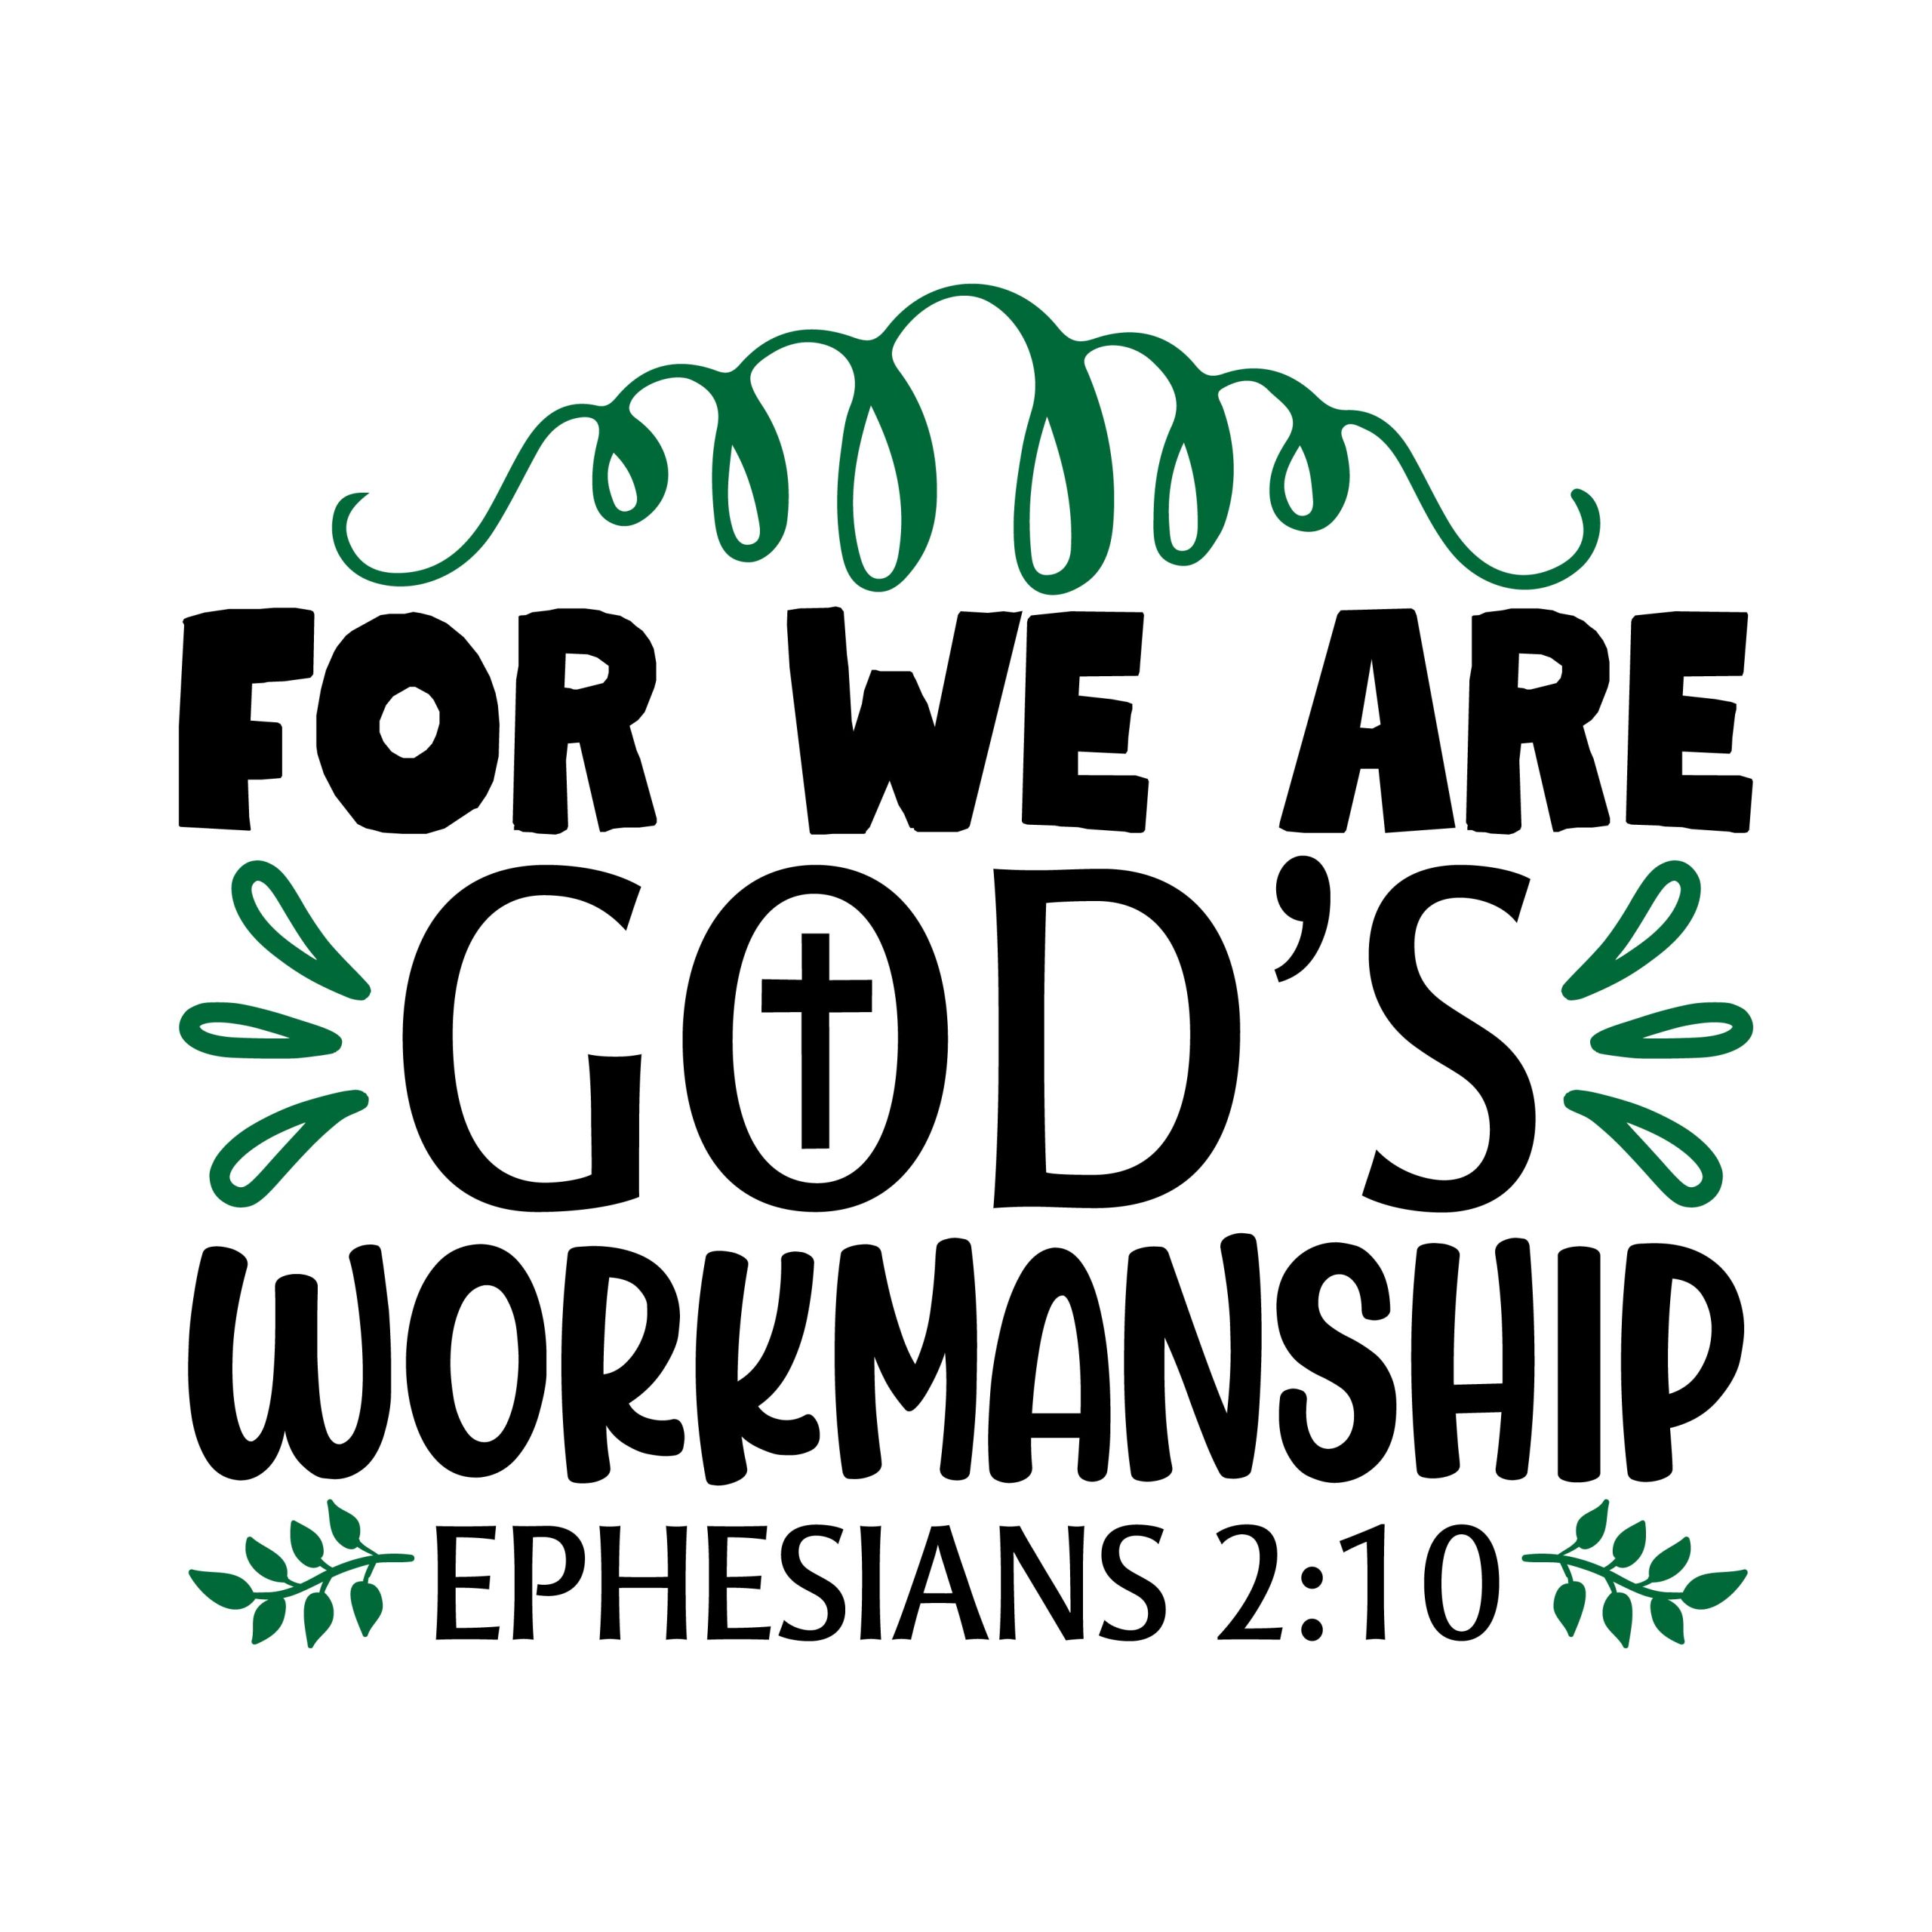 For we are gods workmanship Ephesians 2:10 , bible verses, scripture verses, svg files, passages, sayings, cricut designs, silhouette, embroidery, bundle, free cut files, design space, vector